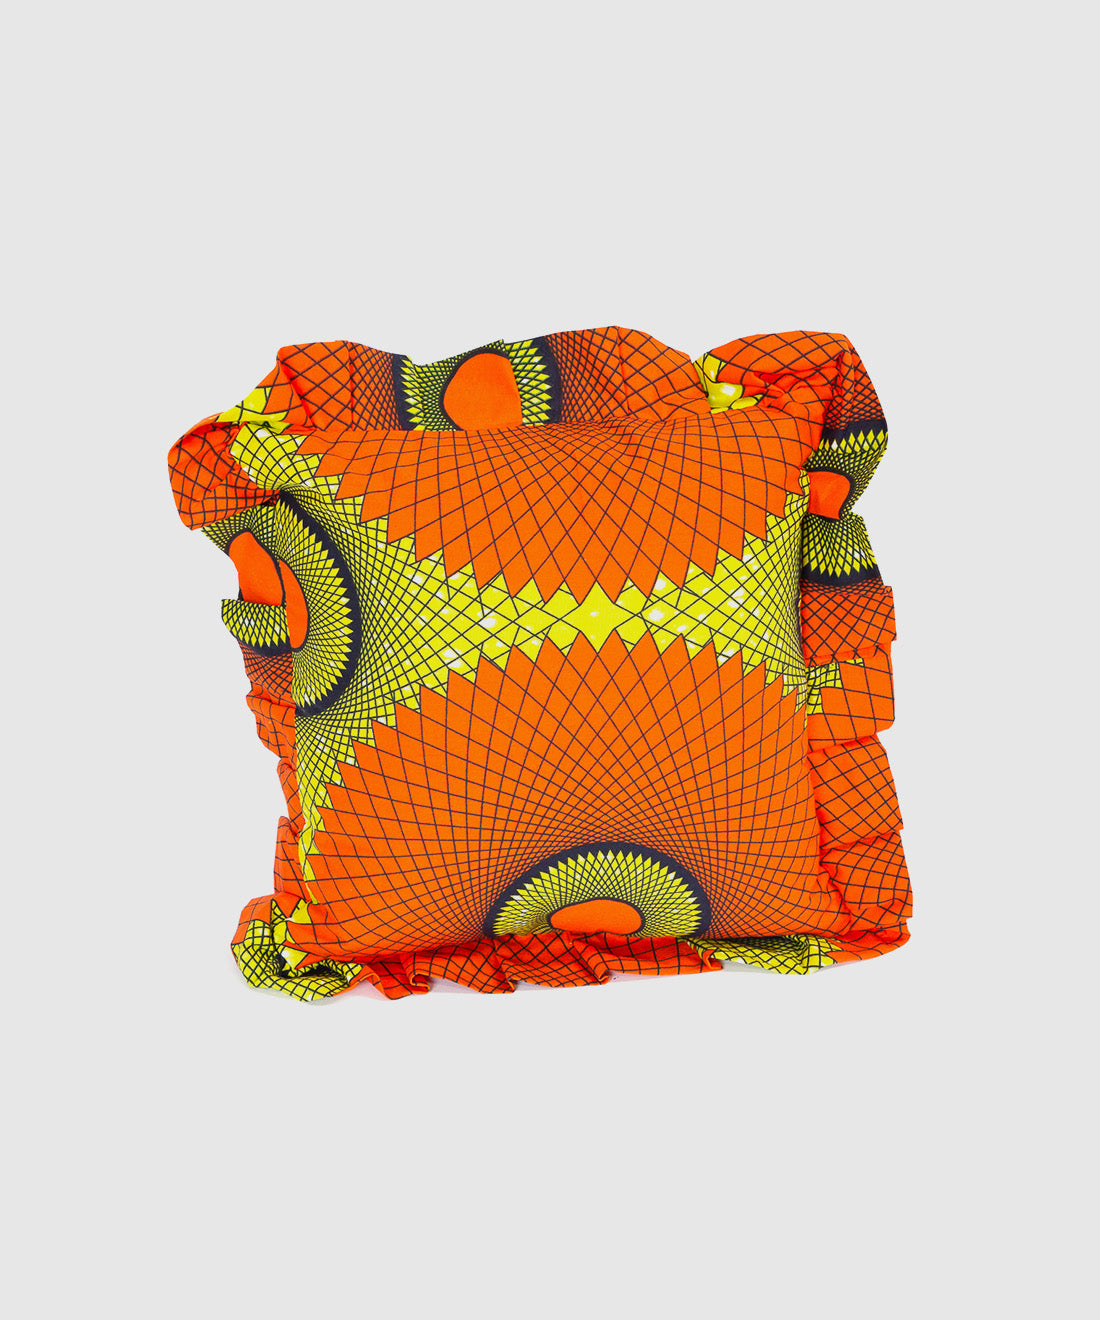 Ruffle Cushion in Orange